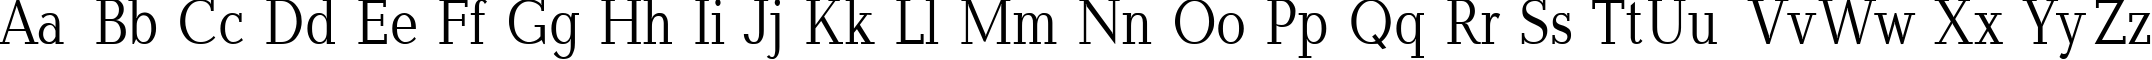 Пример написания английского алфавита шрифтом Baltica80n